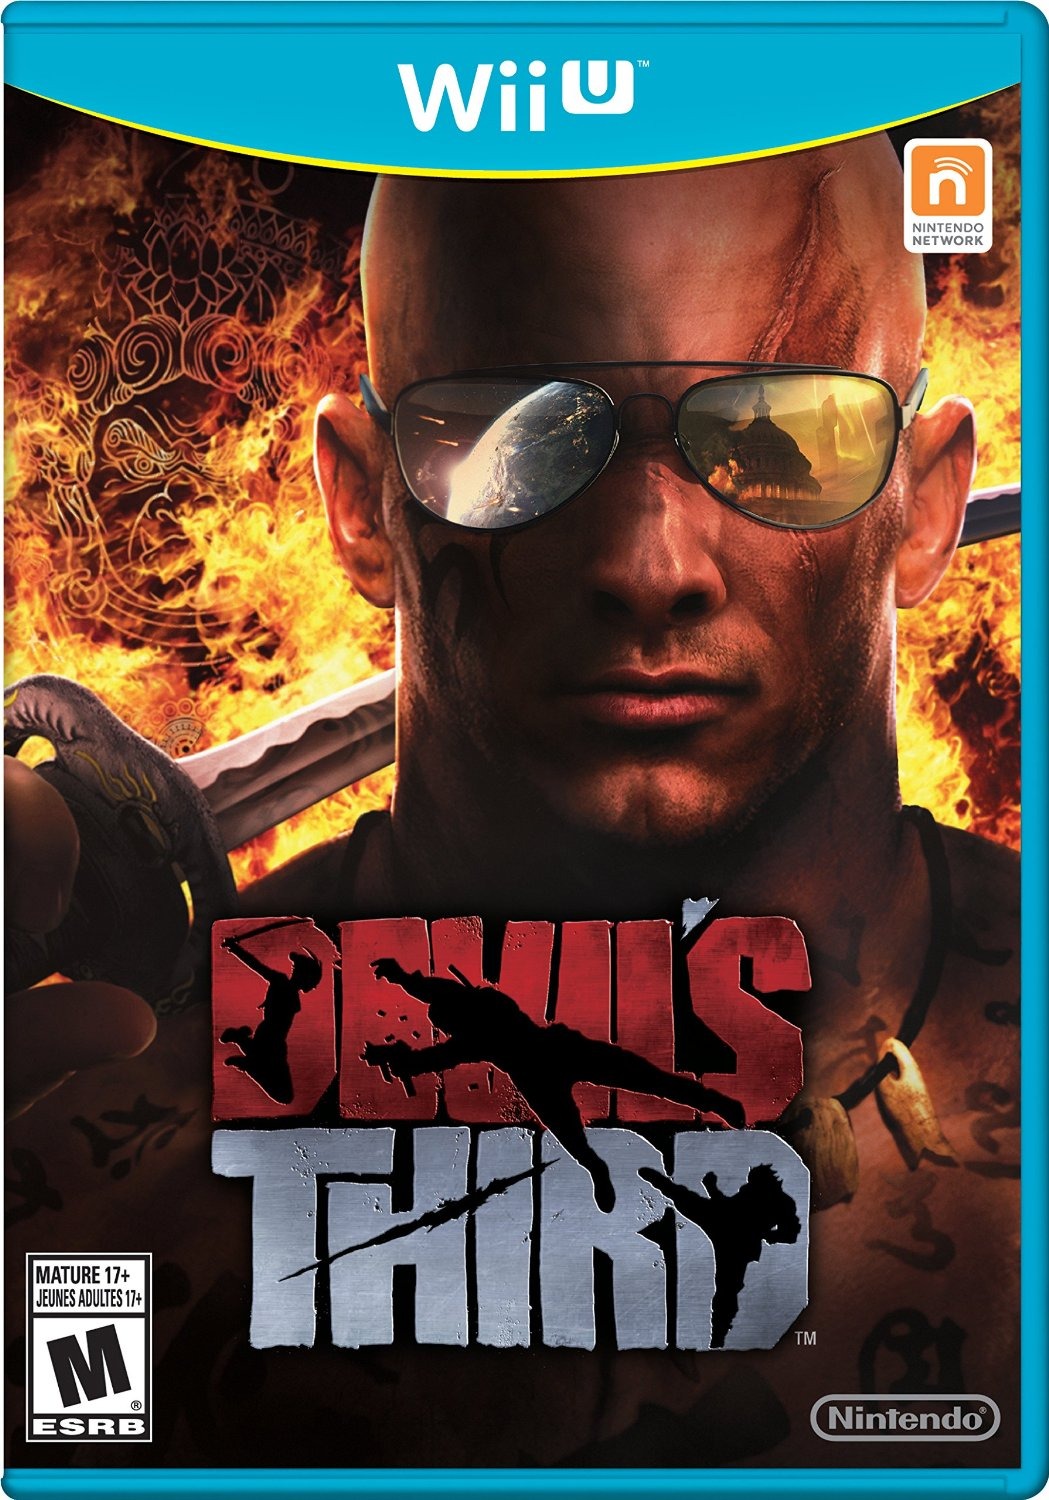 Wii U『Devil's Third』北米版パッケージが高額プレミア化―最高666ドル